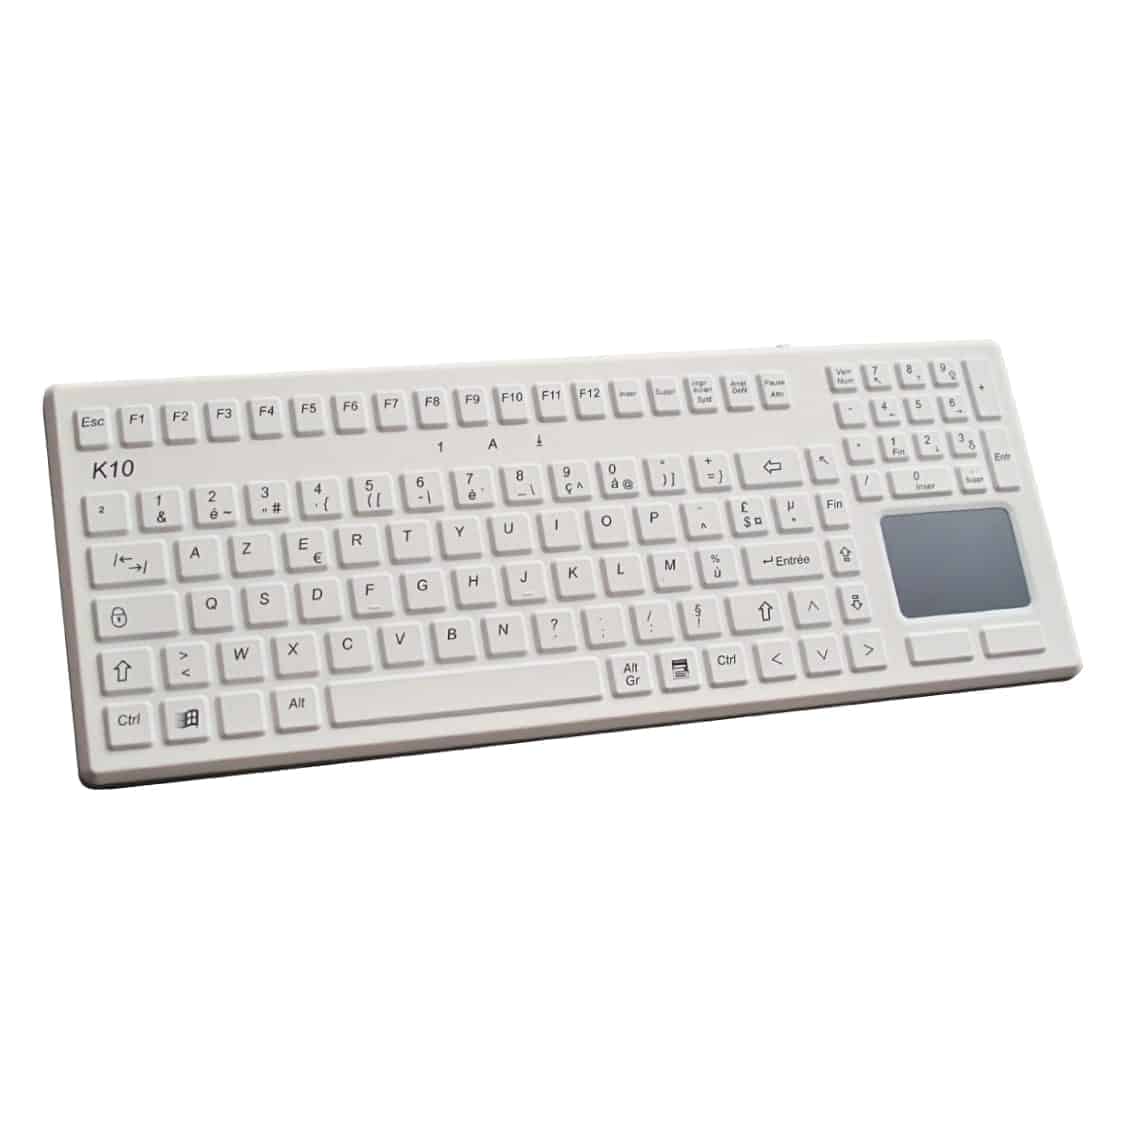 K10 Medical Grade Keyboard